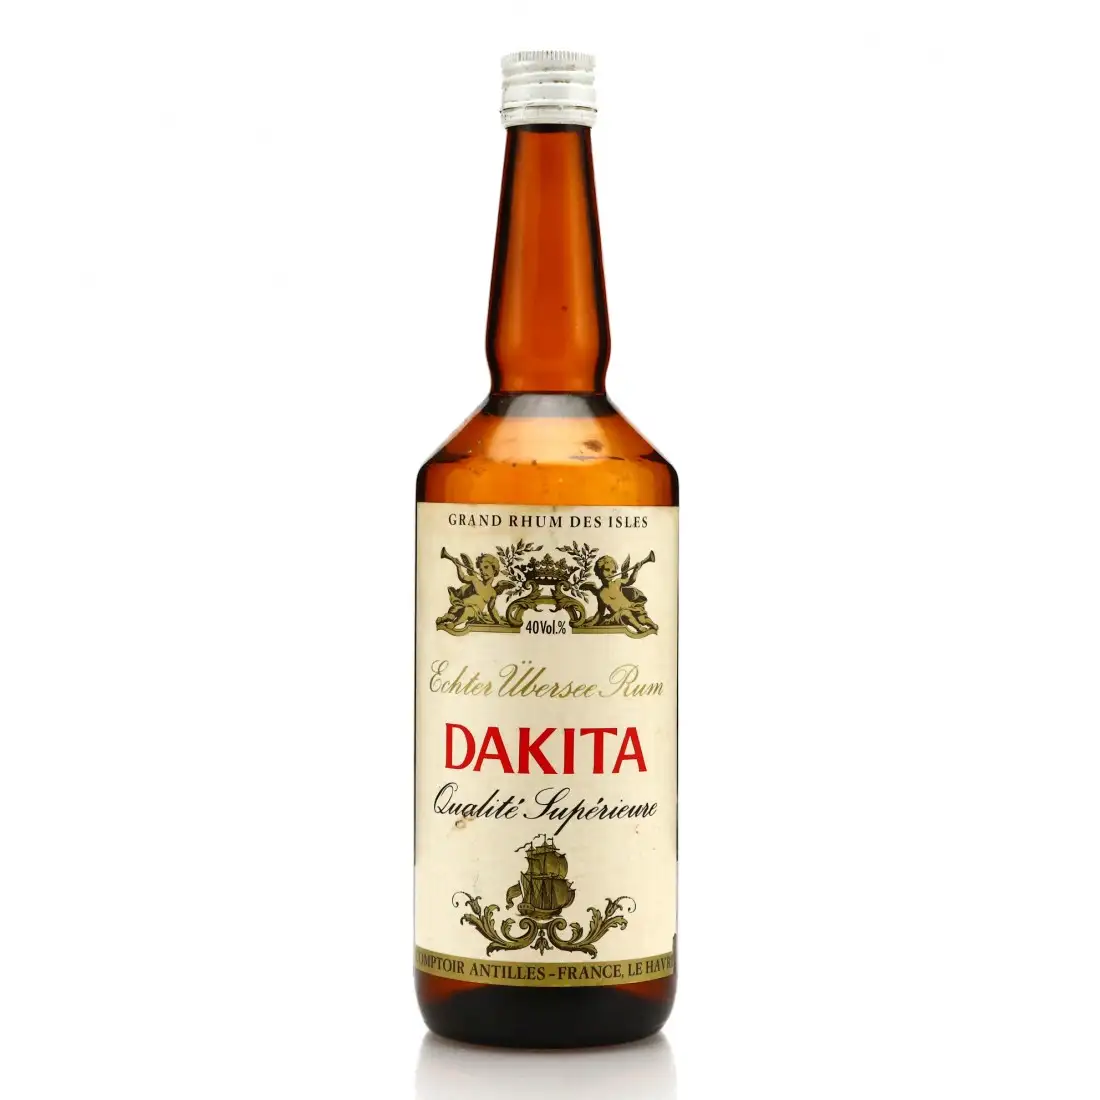 Image of the front of the bottle of the rum Echter Übersee Rum Dakita